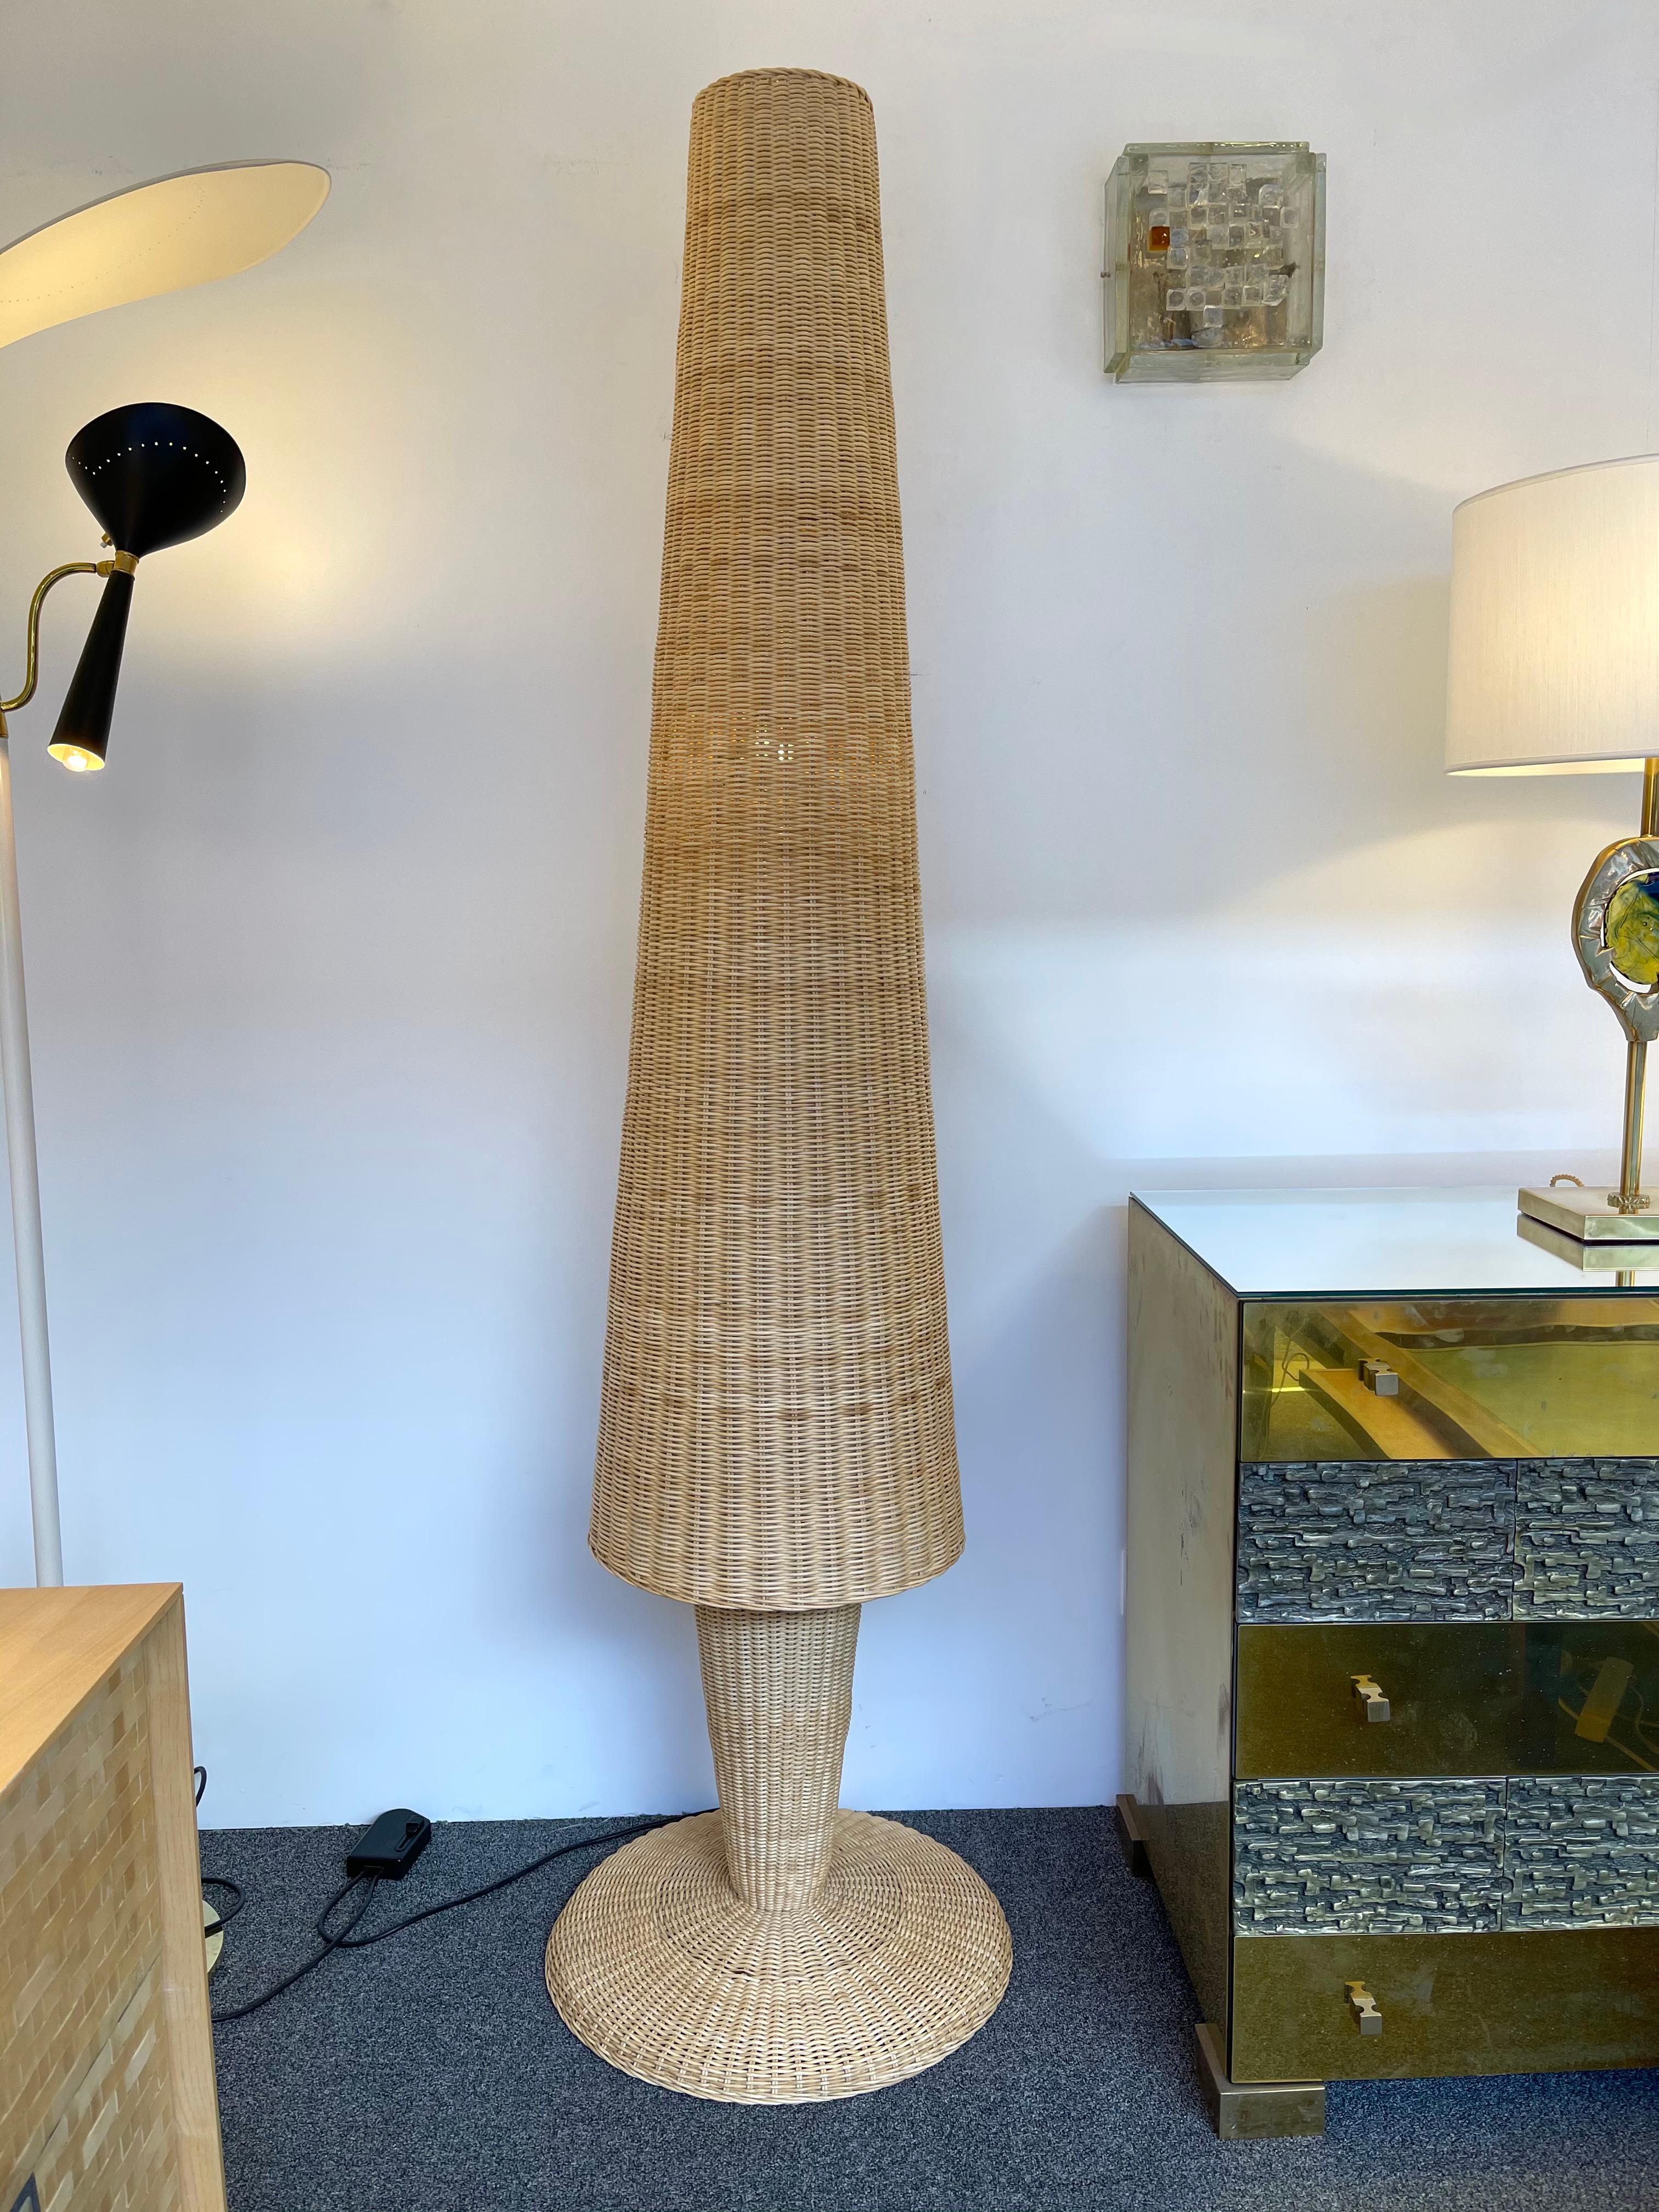 Tall rattan wicker floor lamp by the editor Gasparucci Italo.